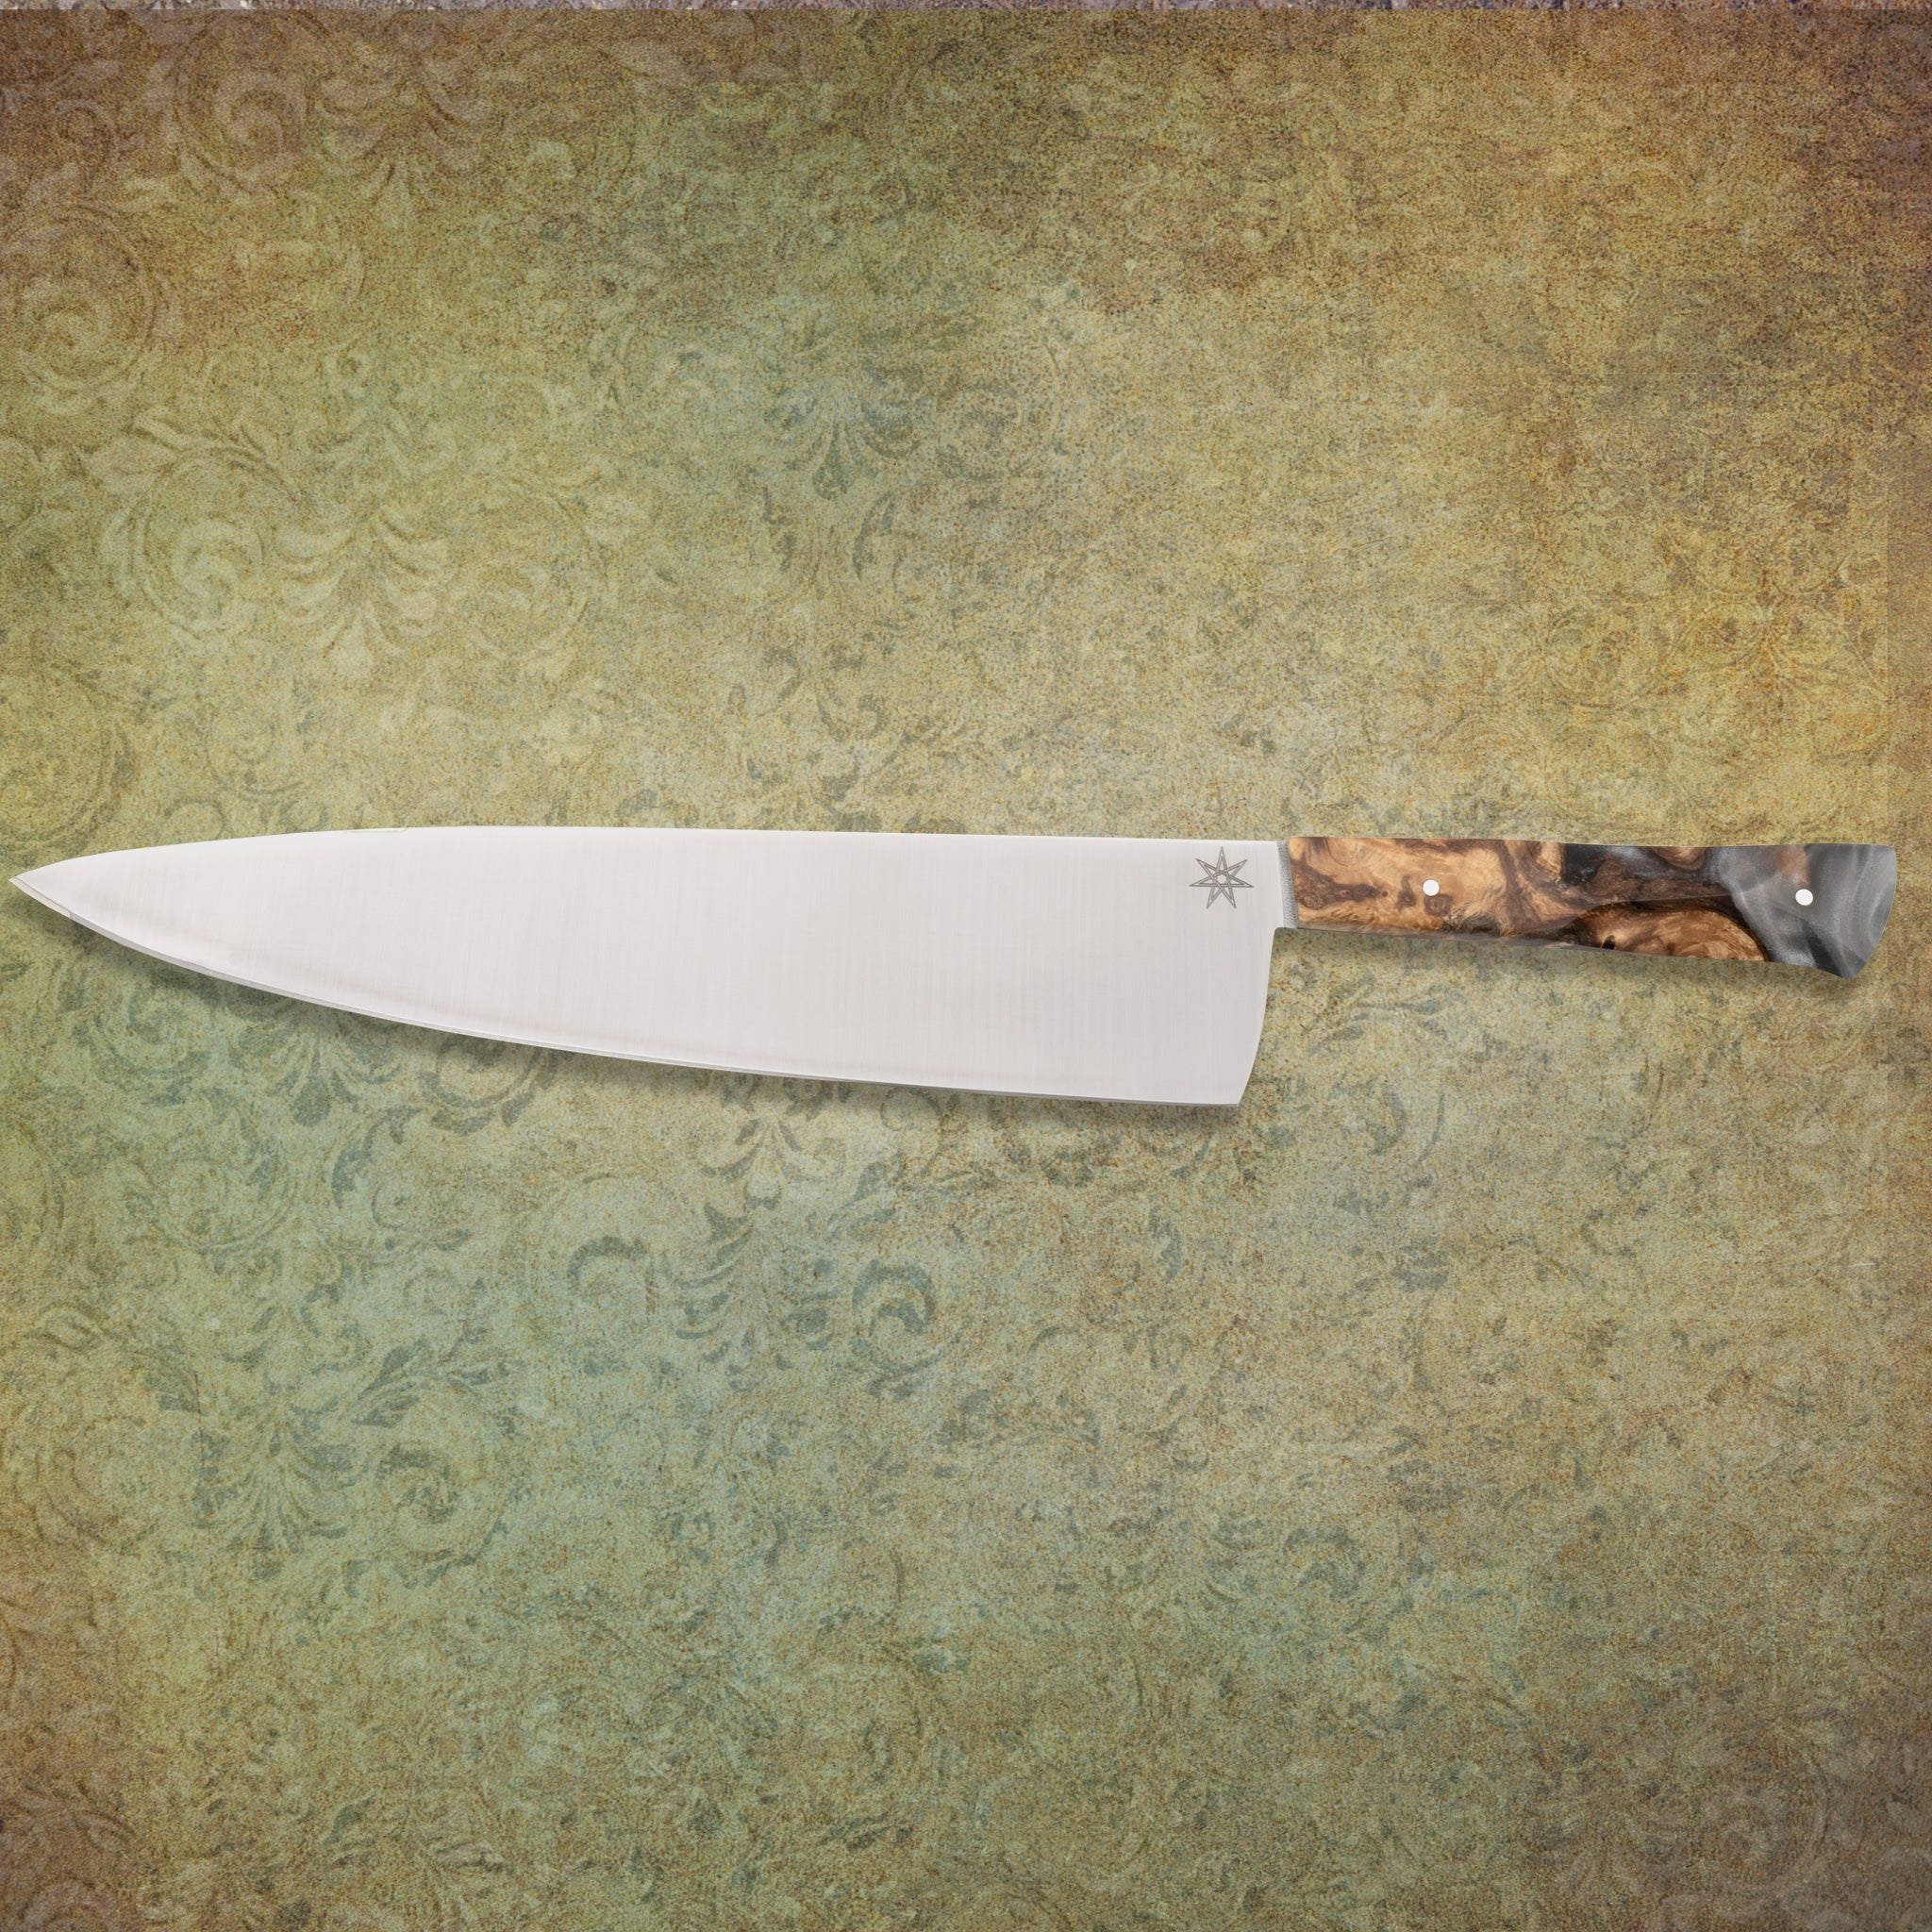 10" Chef Knife - Ag 47